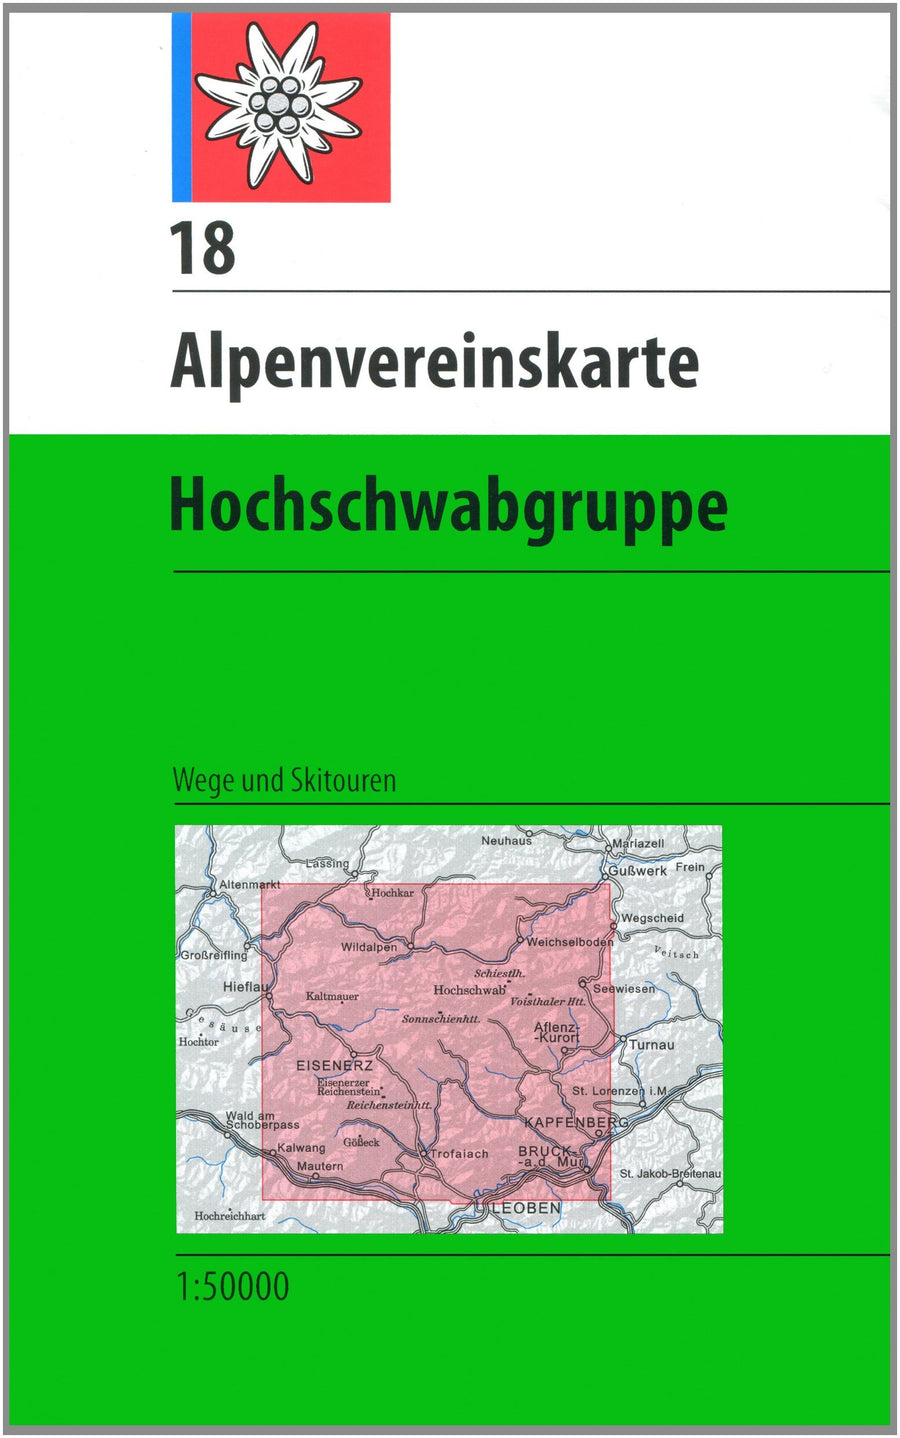 Carte de randonnée & ski - Hochschwabgruppe, n° 18 (Alpes autrichiennes) | Alpenverein carte pliée Alpenverein 